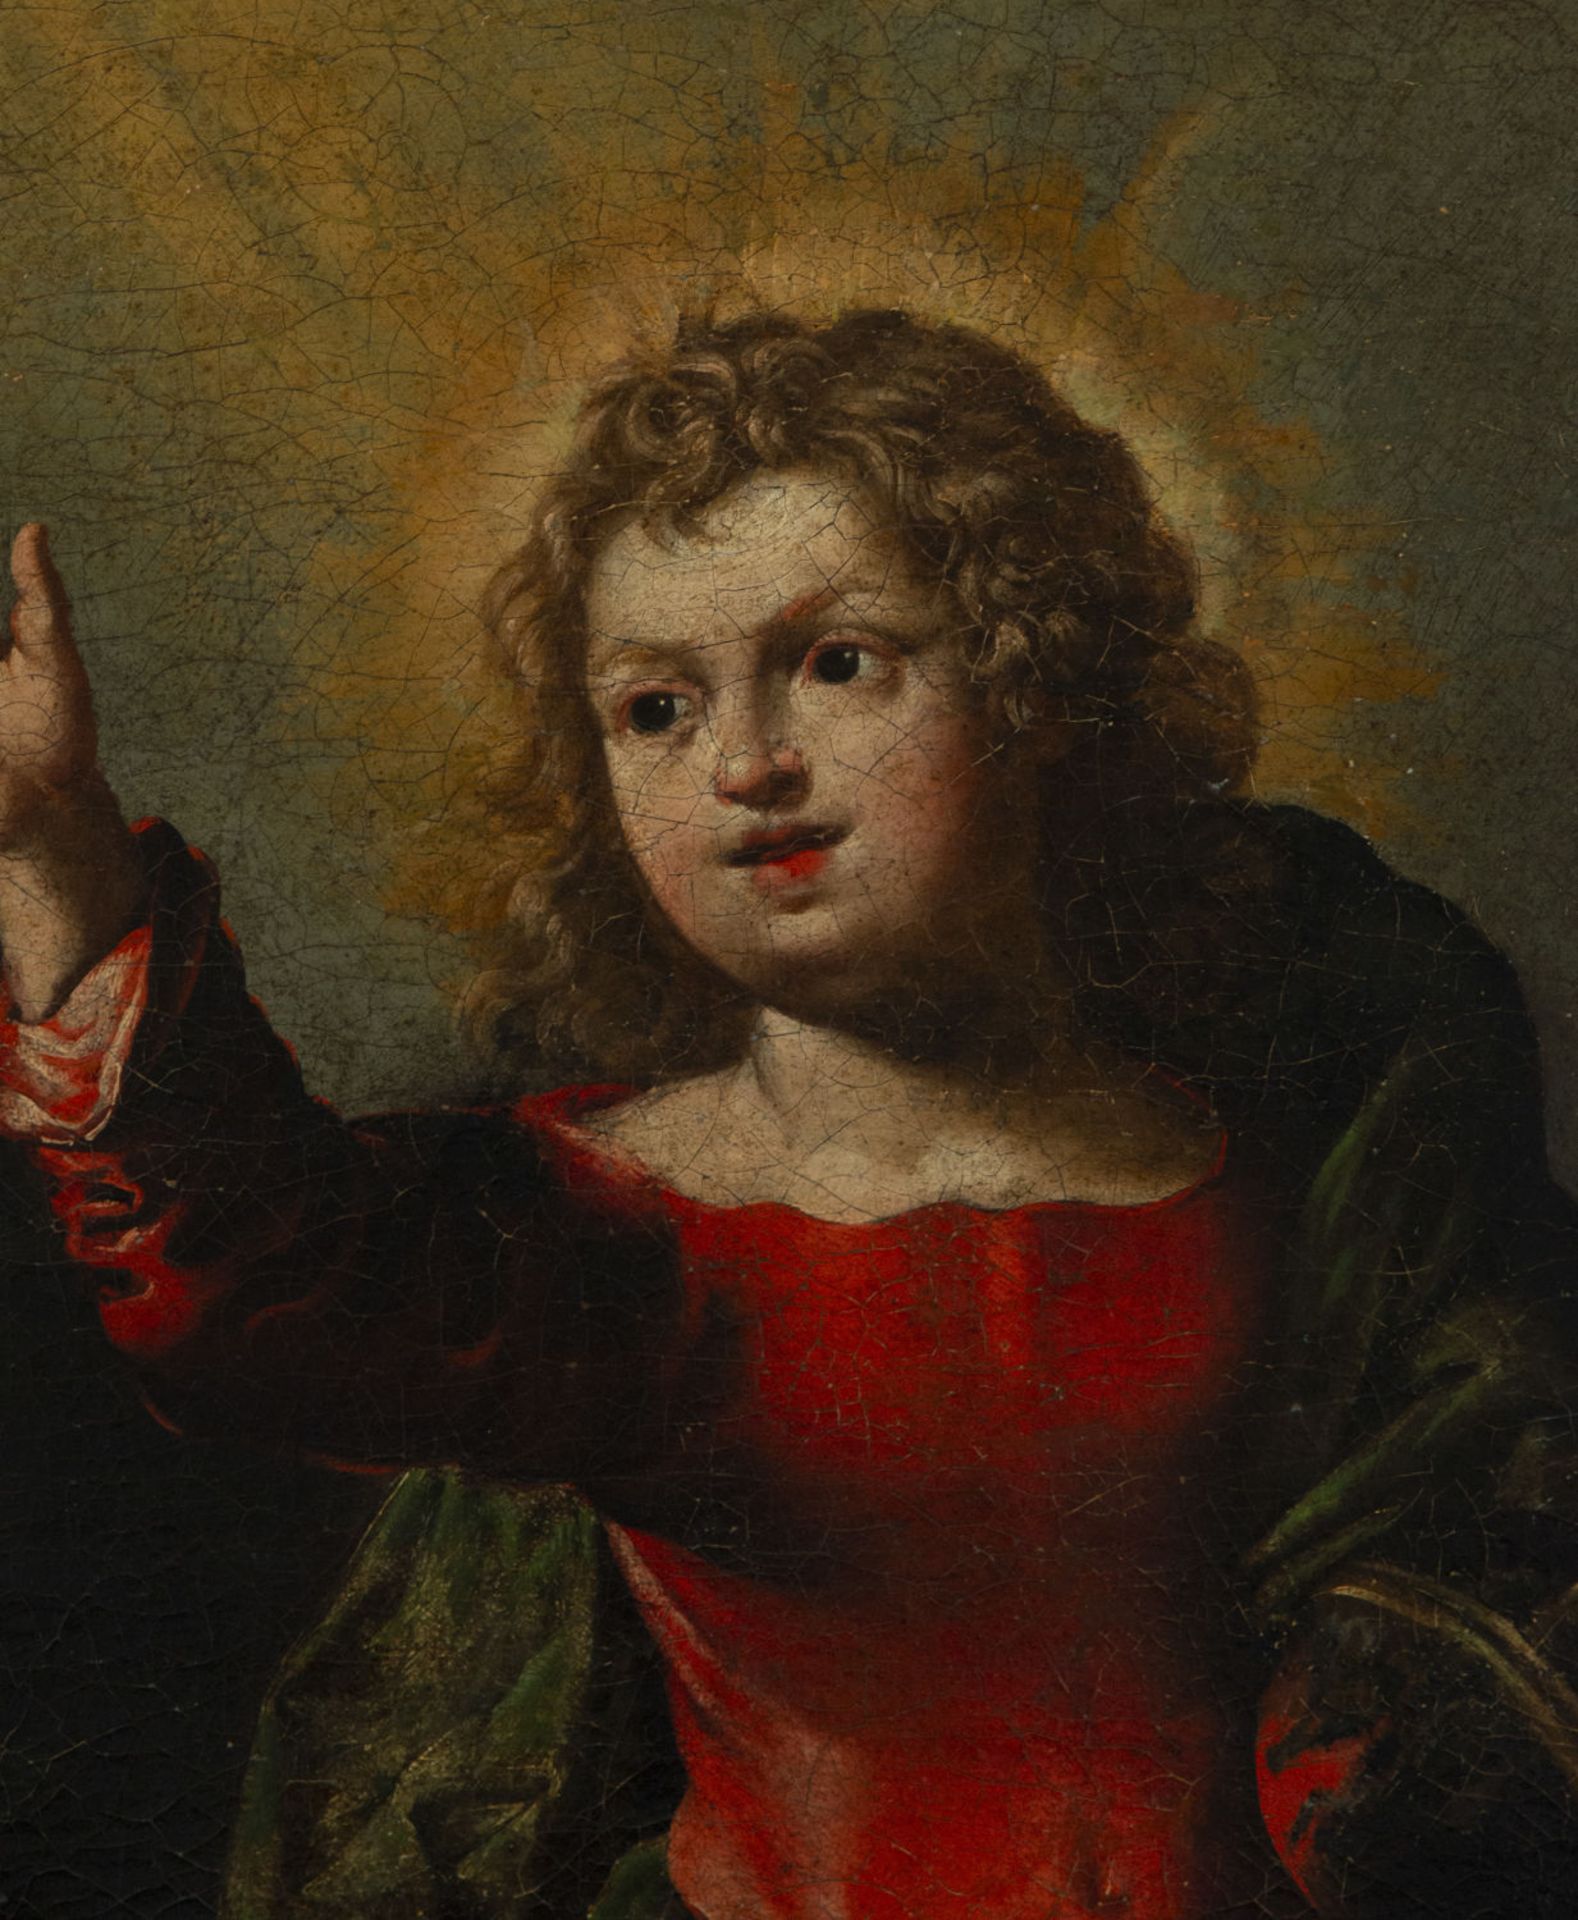 Child Jesus of the Passion, Flemish school of the circle of Justus Sustermans (Antwerp, September 28 - Bild 6 aus 11